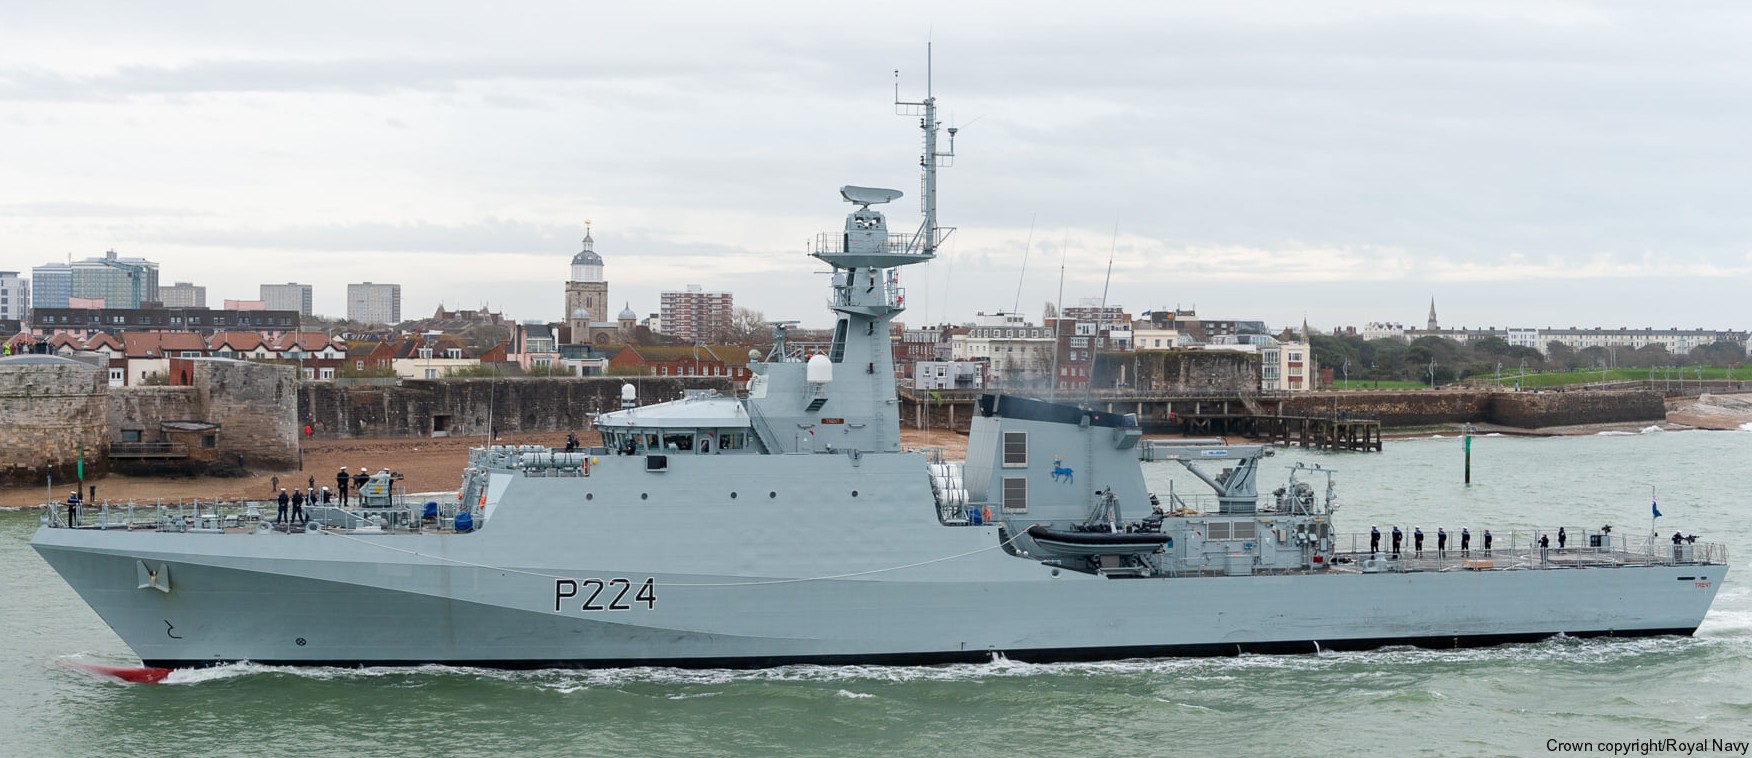 p-224 hms trent river class offshore patrol vessel opv royal navy 11